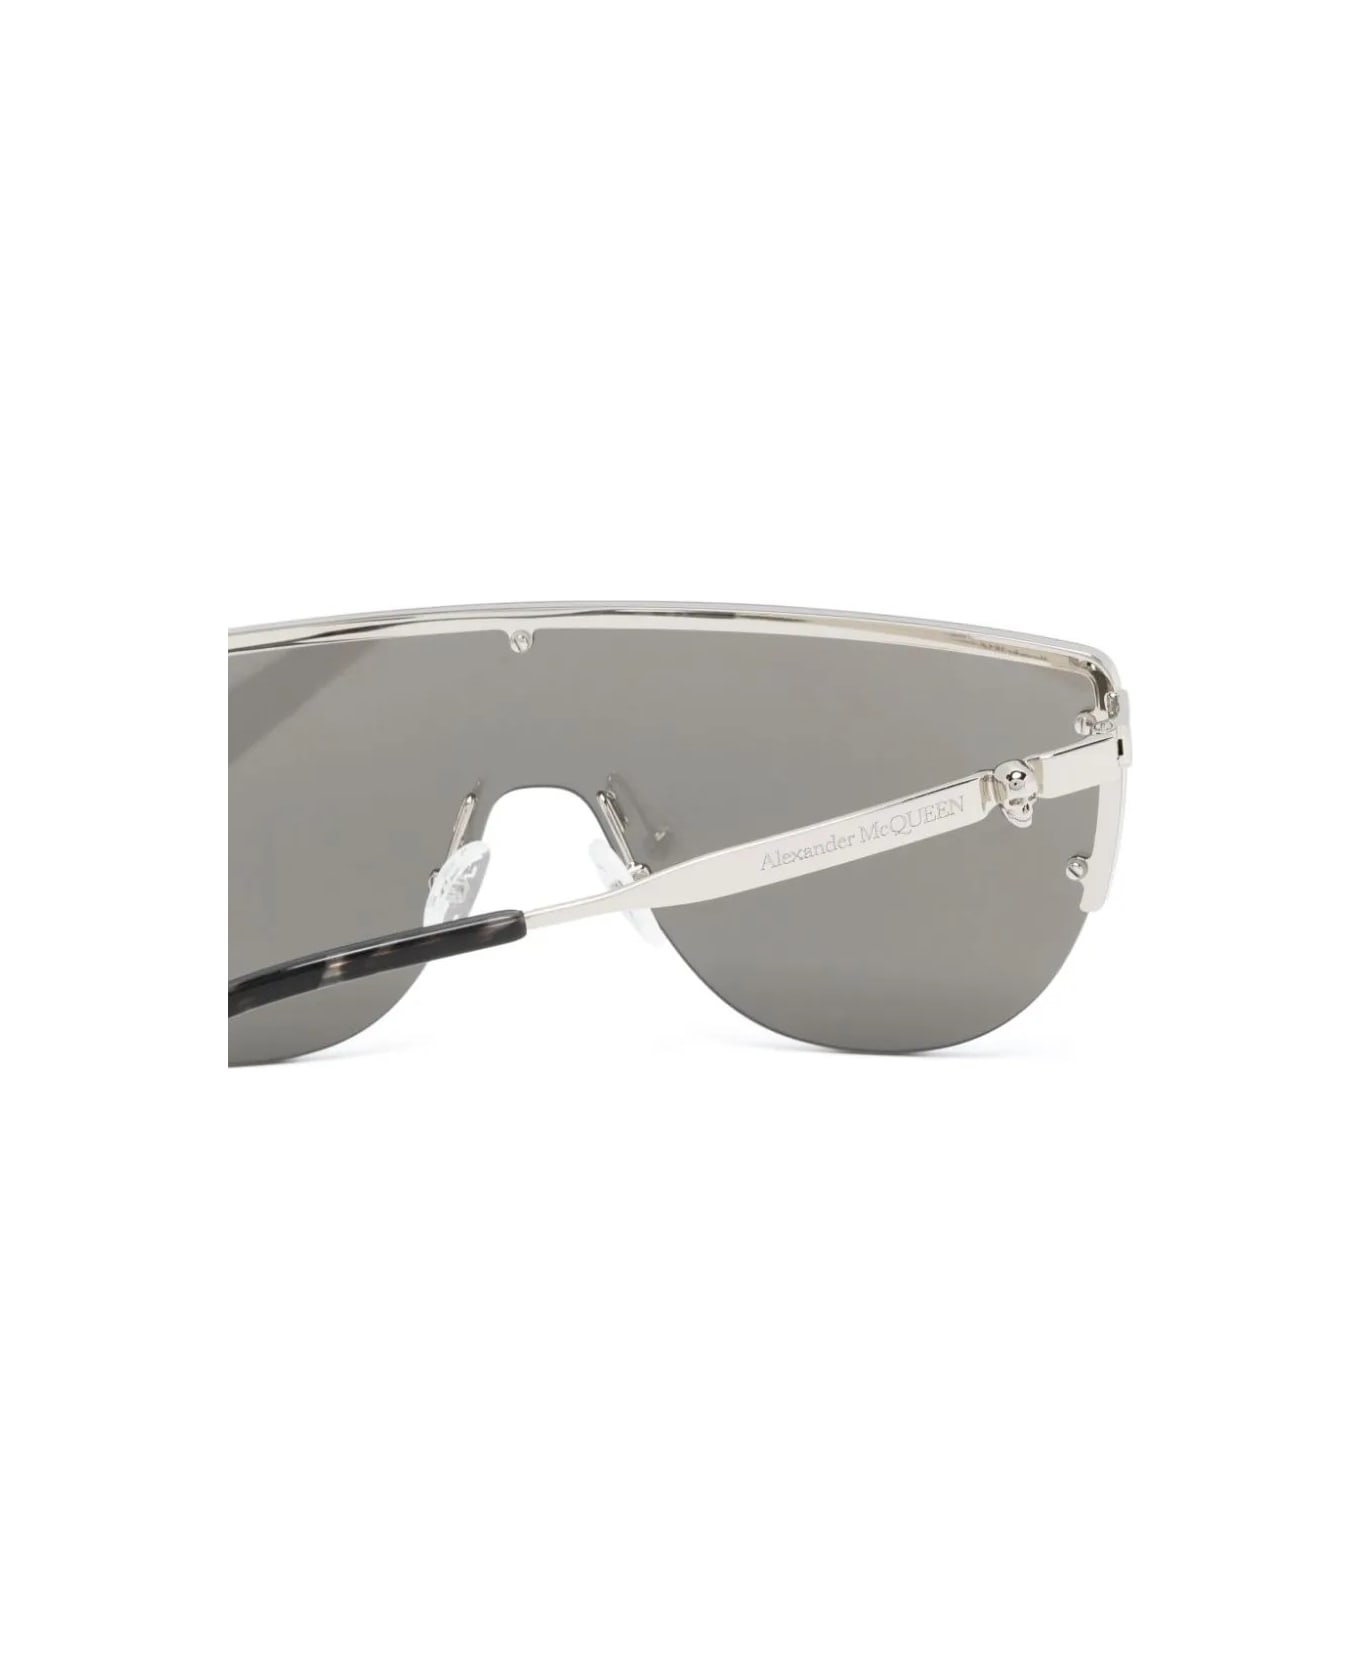 Alexander McQueen Skull Detailed Sunglasses - Silver